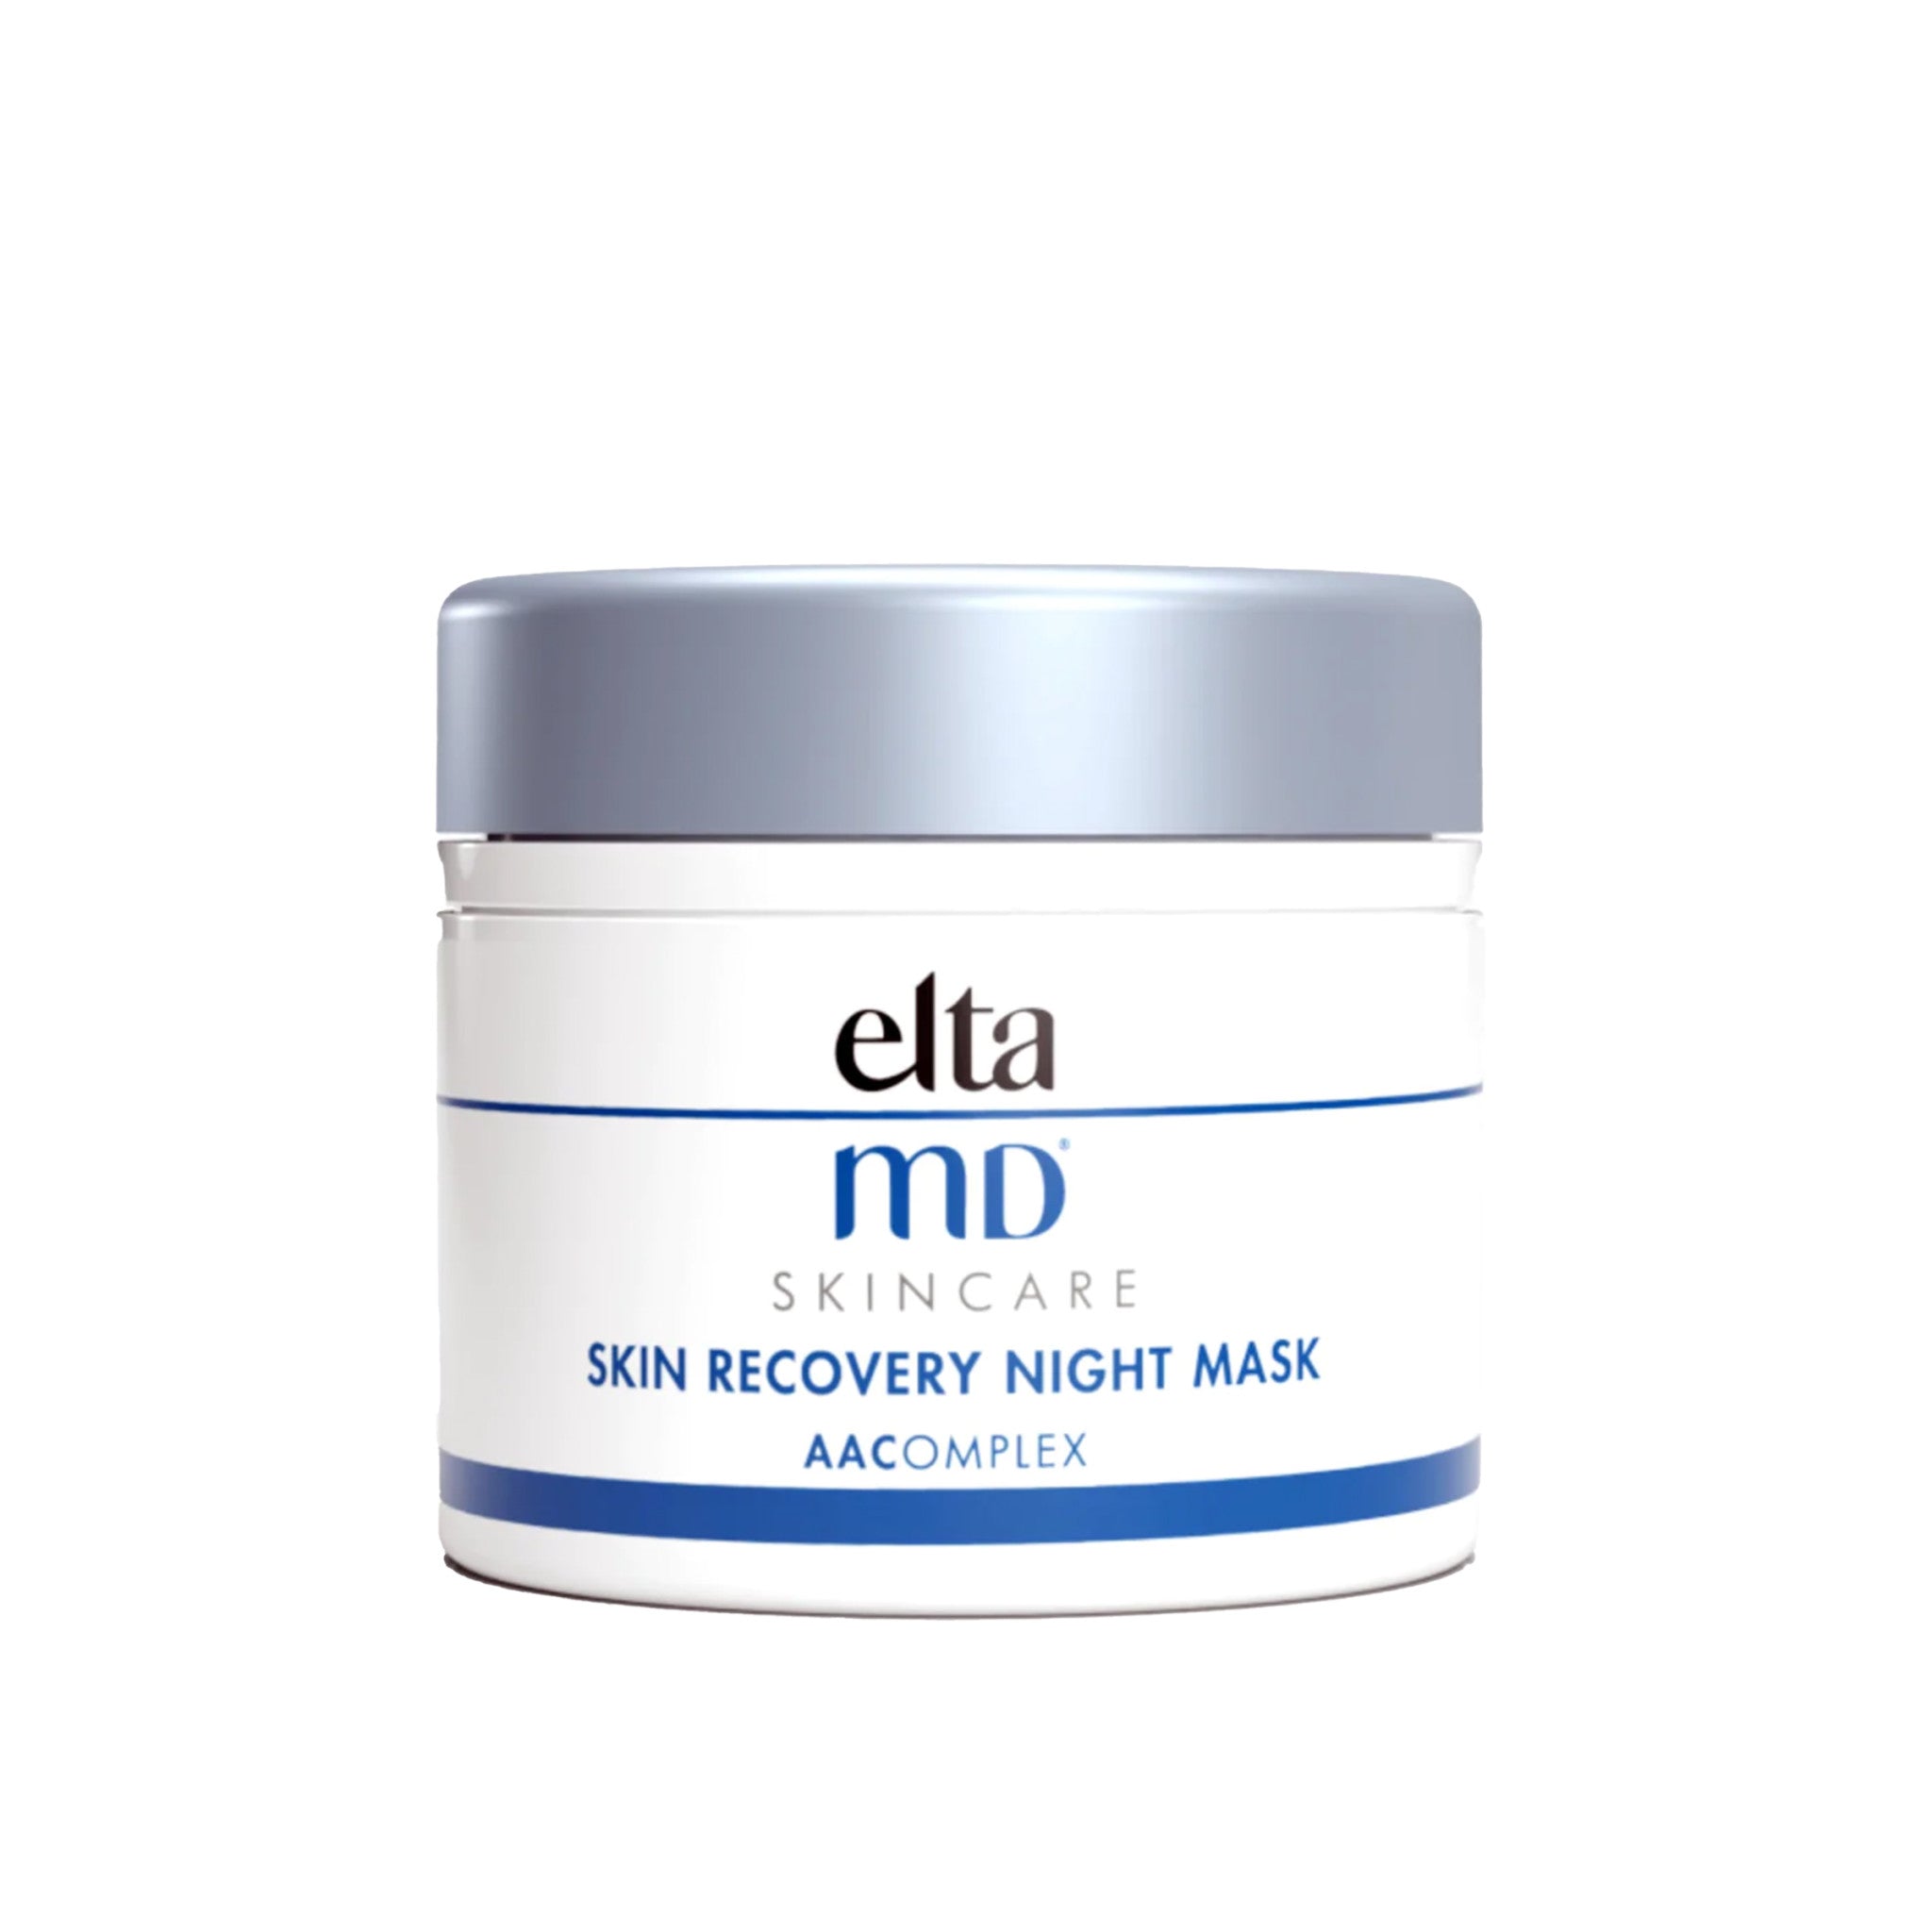 EltaMD Skin Recovery Night Mask main image.